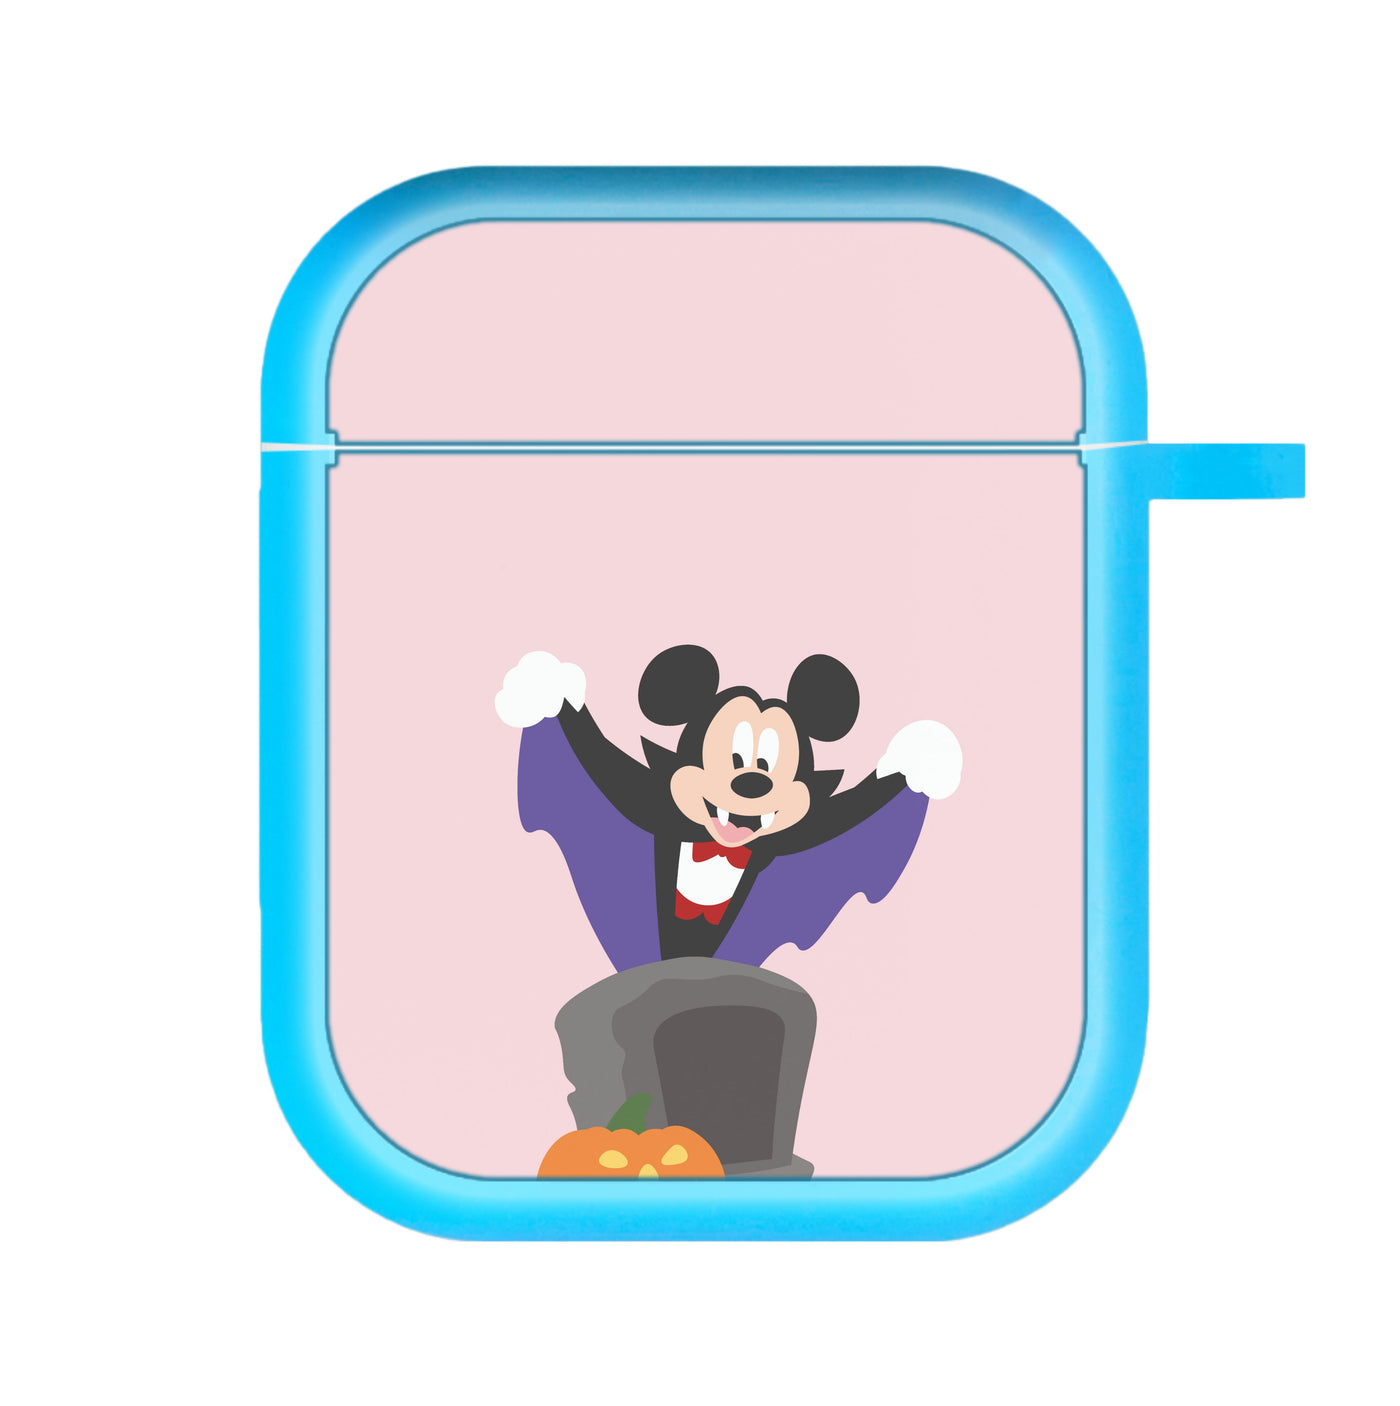 Vampire Mickey Mouse - Disney Halloween AirPods Case